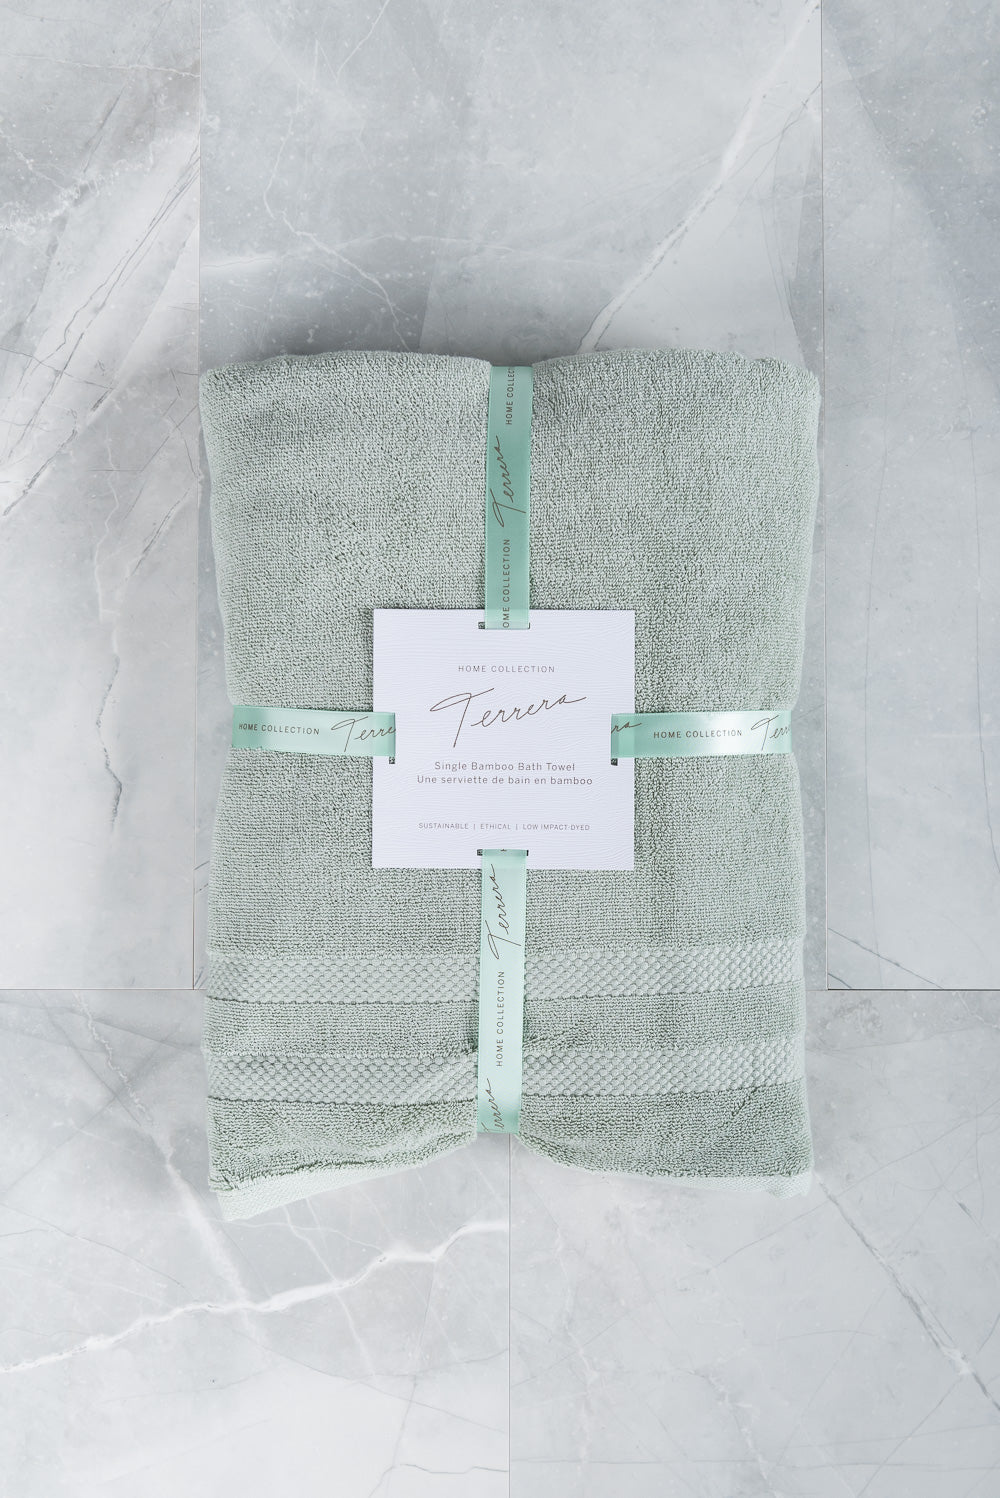 Single Bamboo Bath Towel - Desert Sage